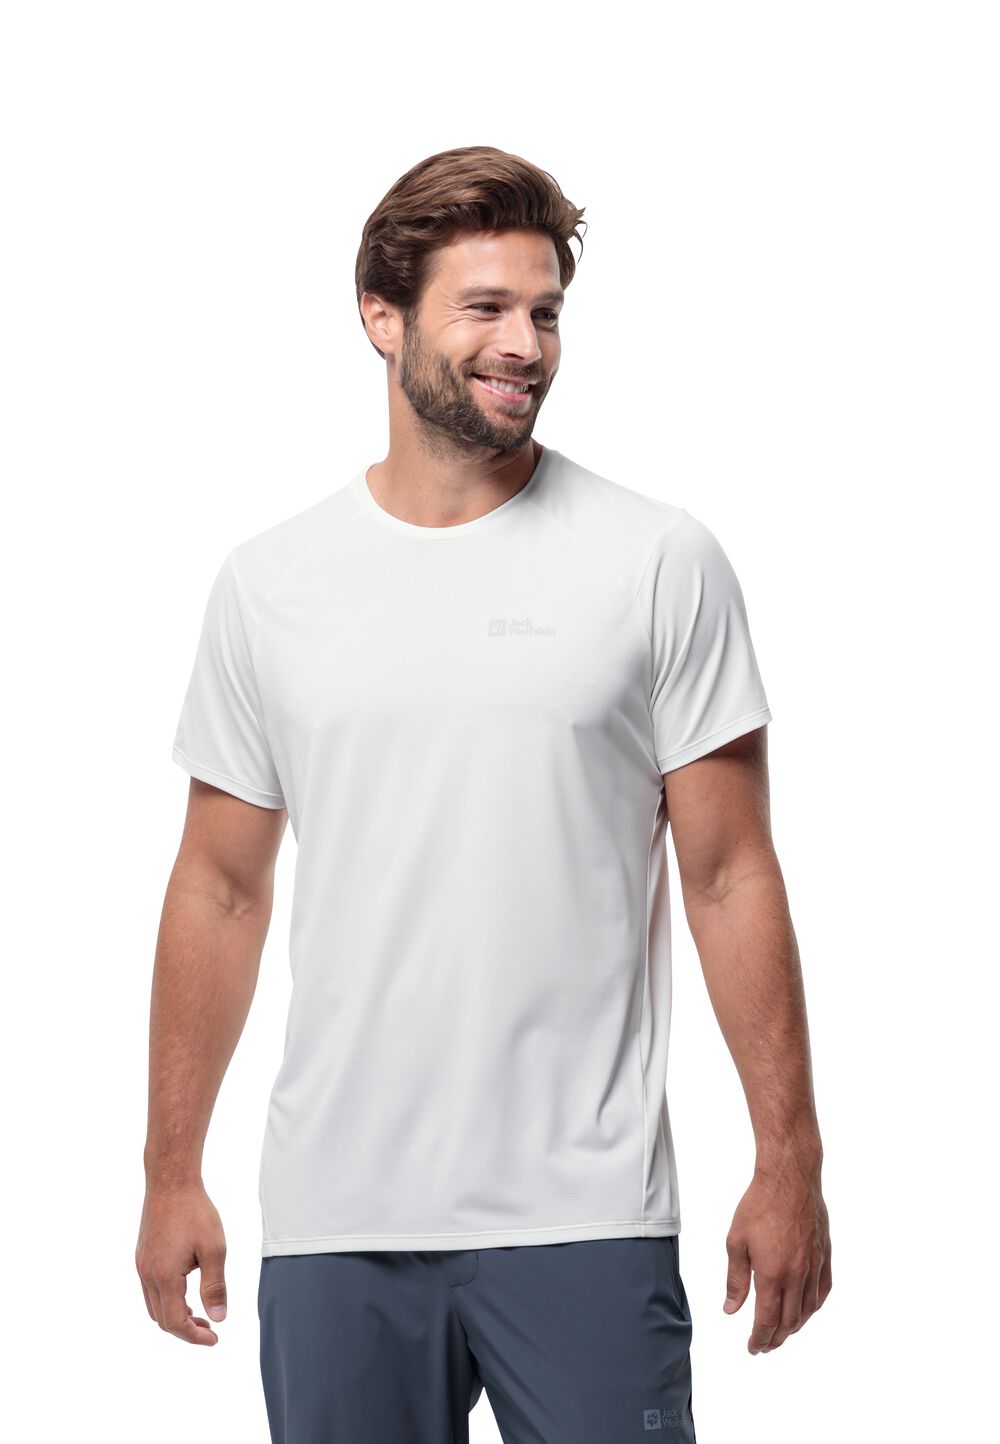 Jack Wolfskin Prelight Trail T-Shirt Men Functioneel shirt Heren L wit stark white